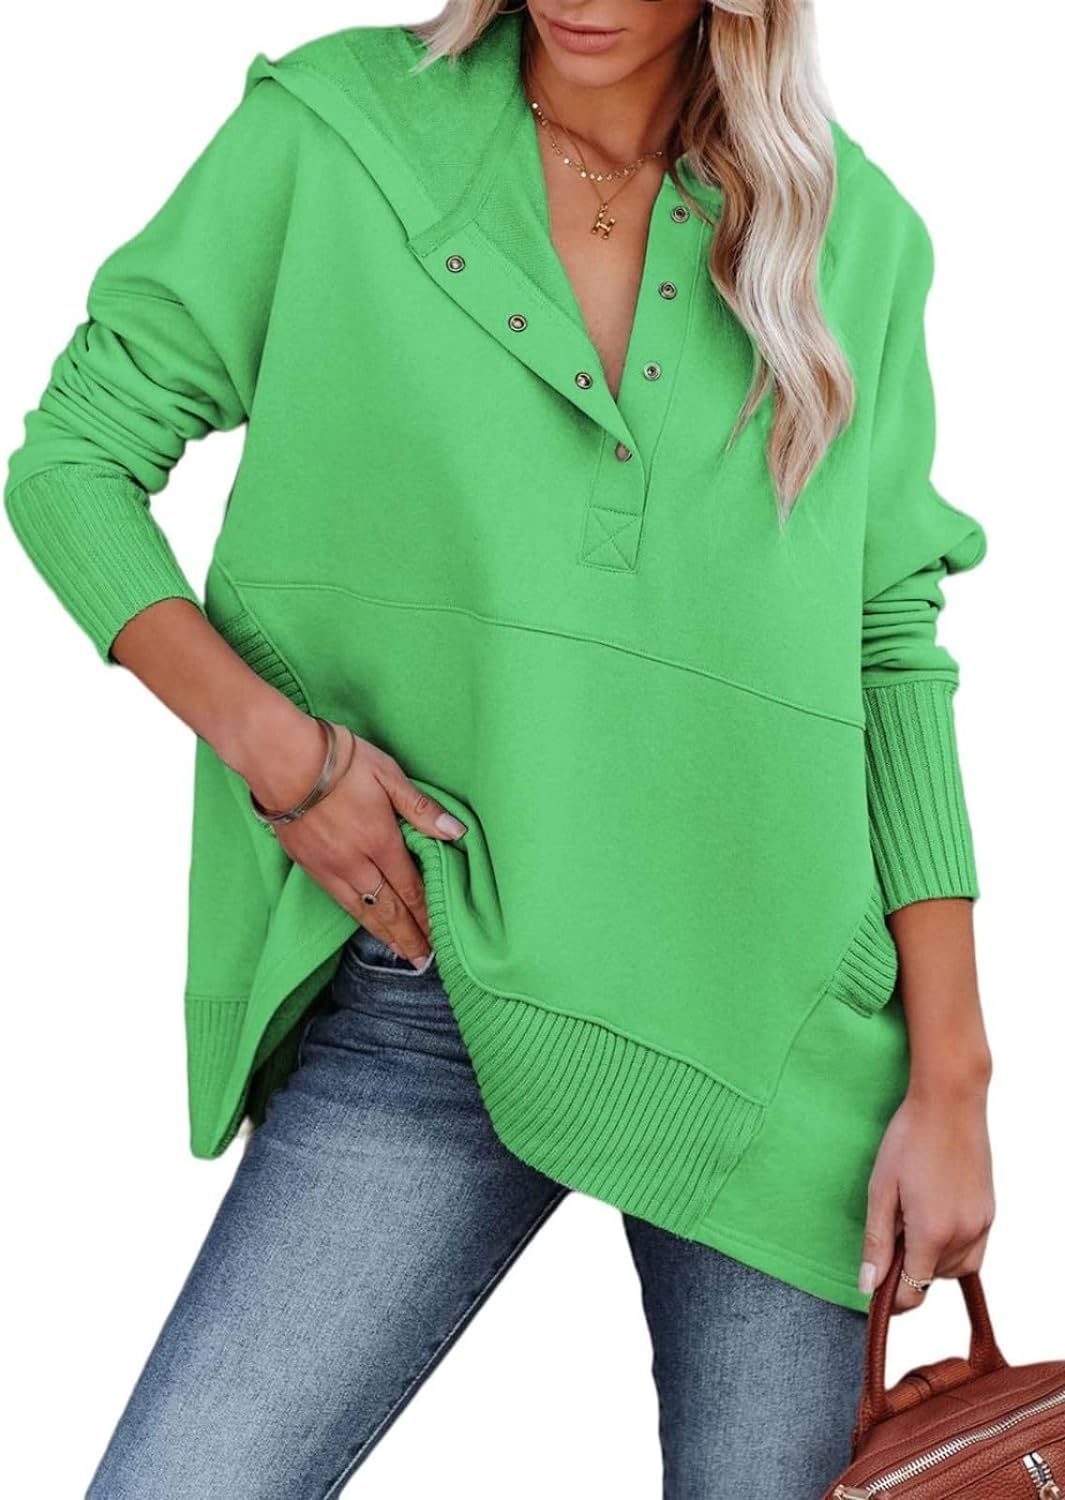 Zwurew Hoodies for Women Oversized Sweatshirt Pullover Long Sleeve Tops Henley Shirt with Pocket | Amazon (US)